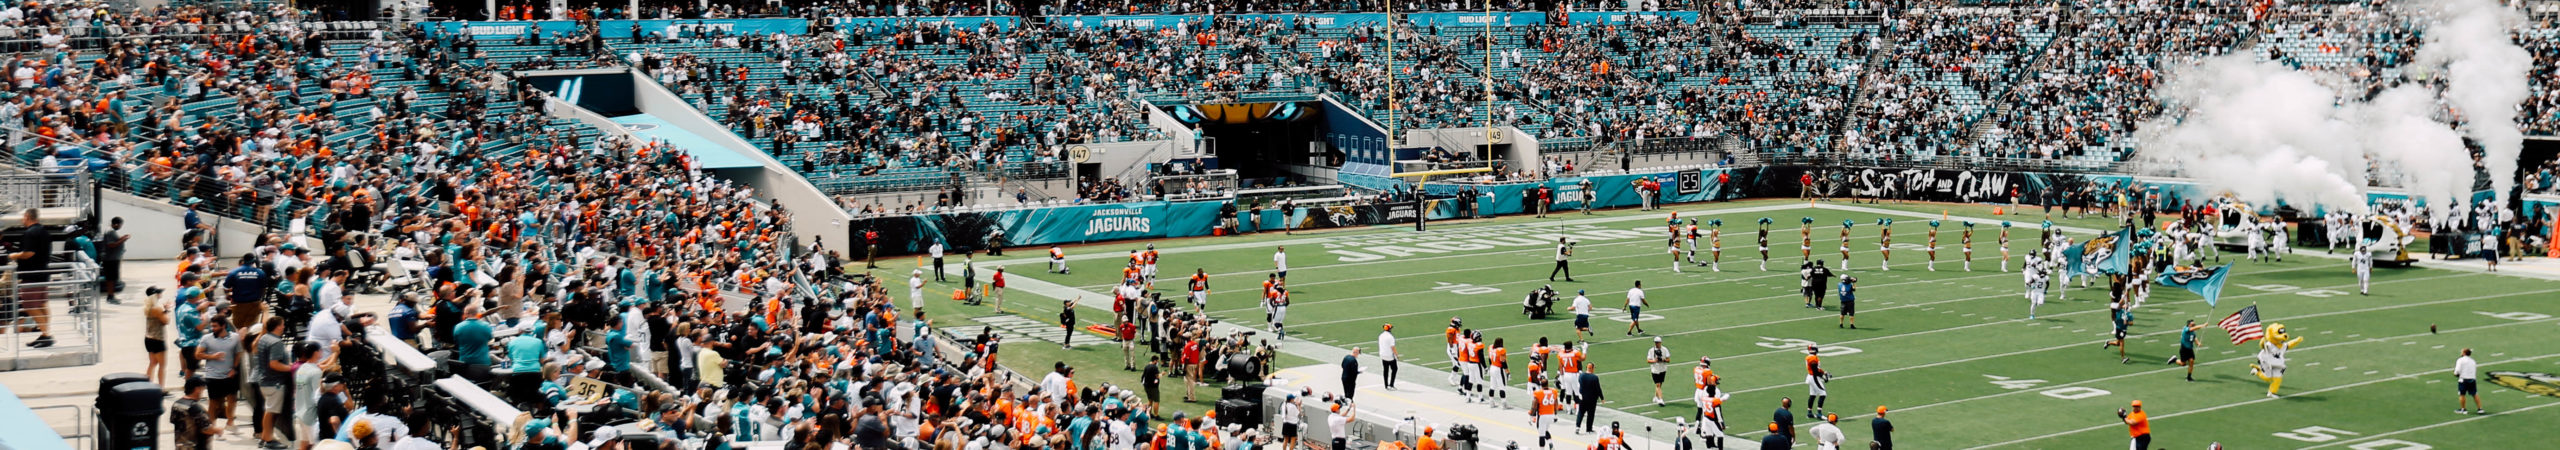 Jaguars vs Broncos